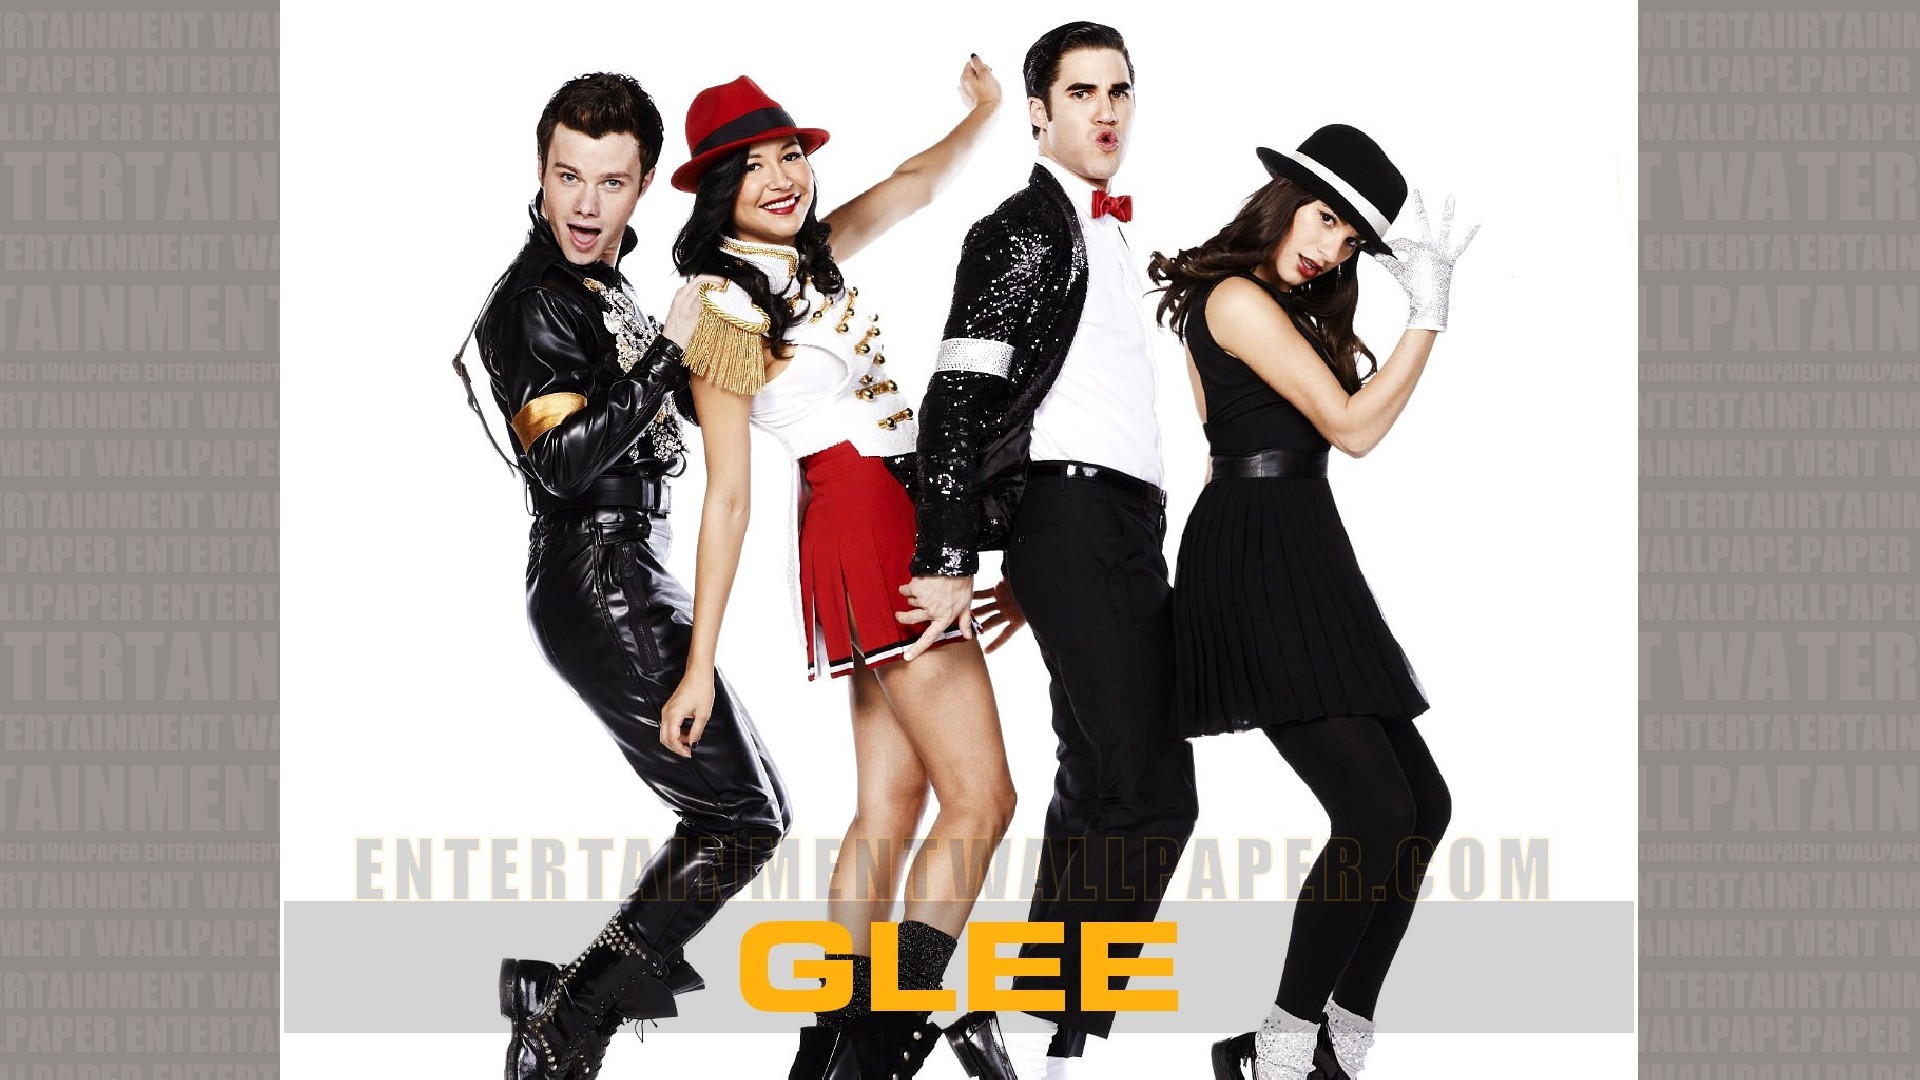 1920x1080 Glee Wallpaper - Original size, download now.